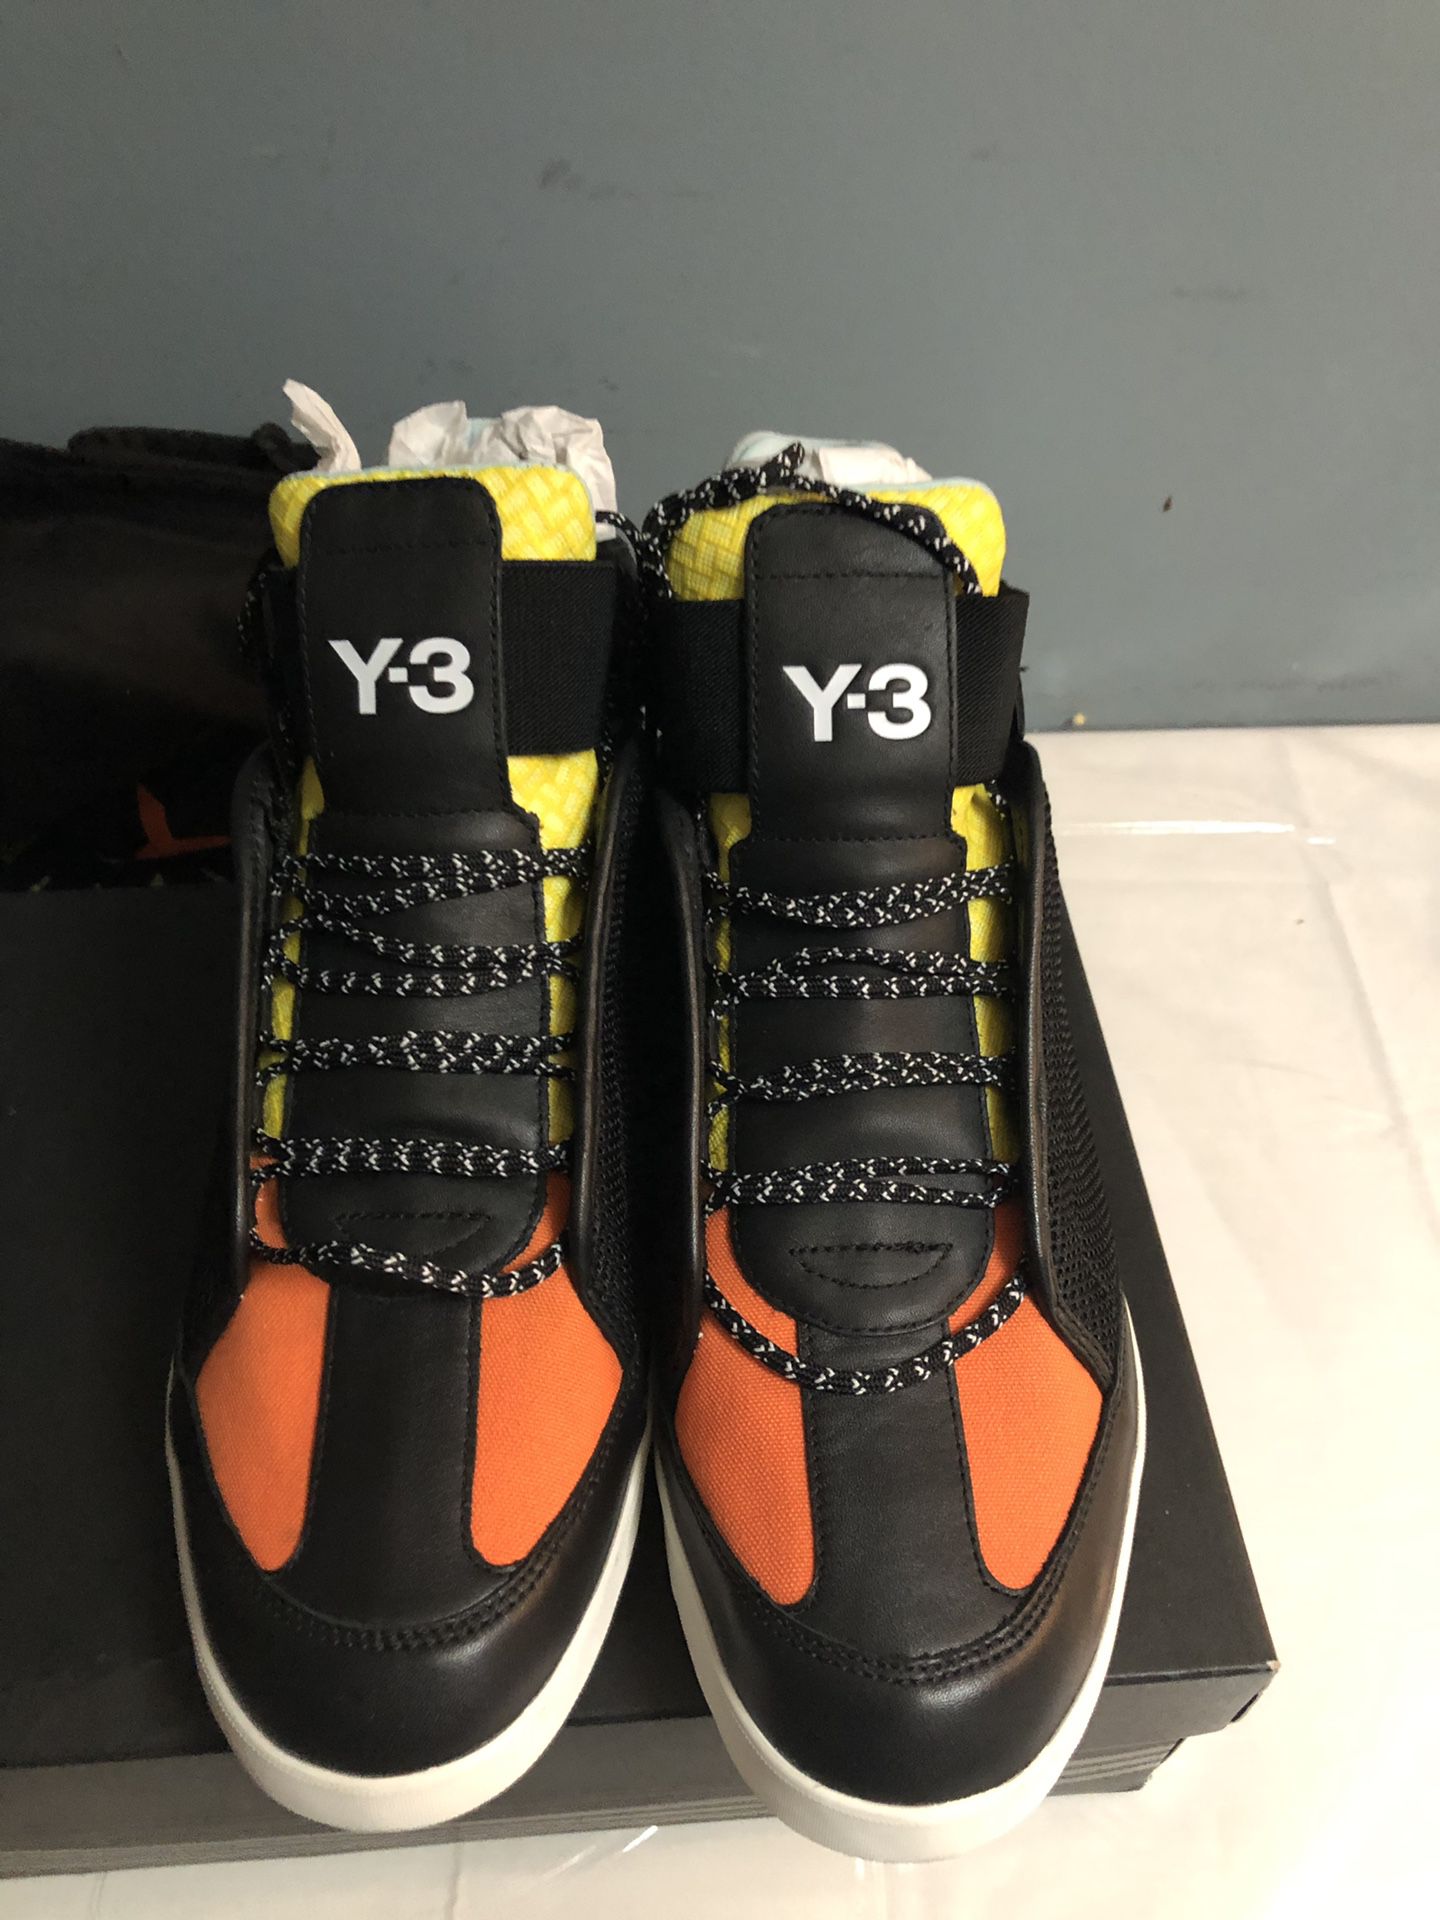 y-3 yohji yamamoto Brand New sneaker (Men size 12)